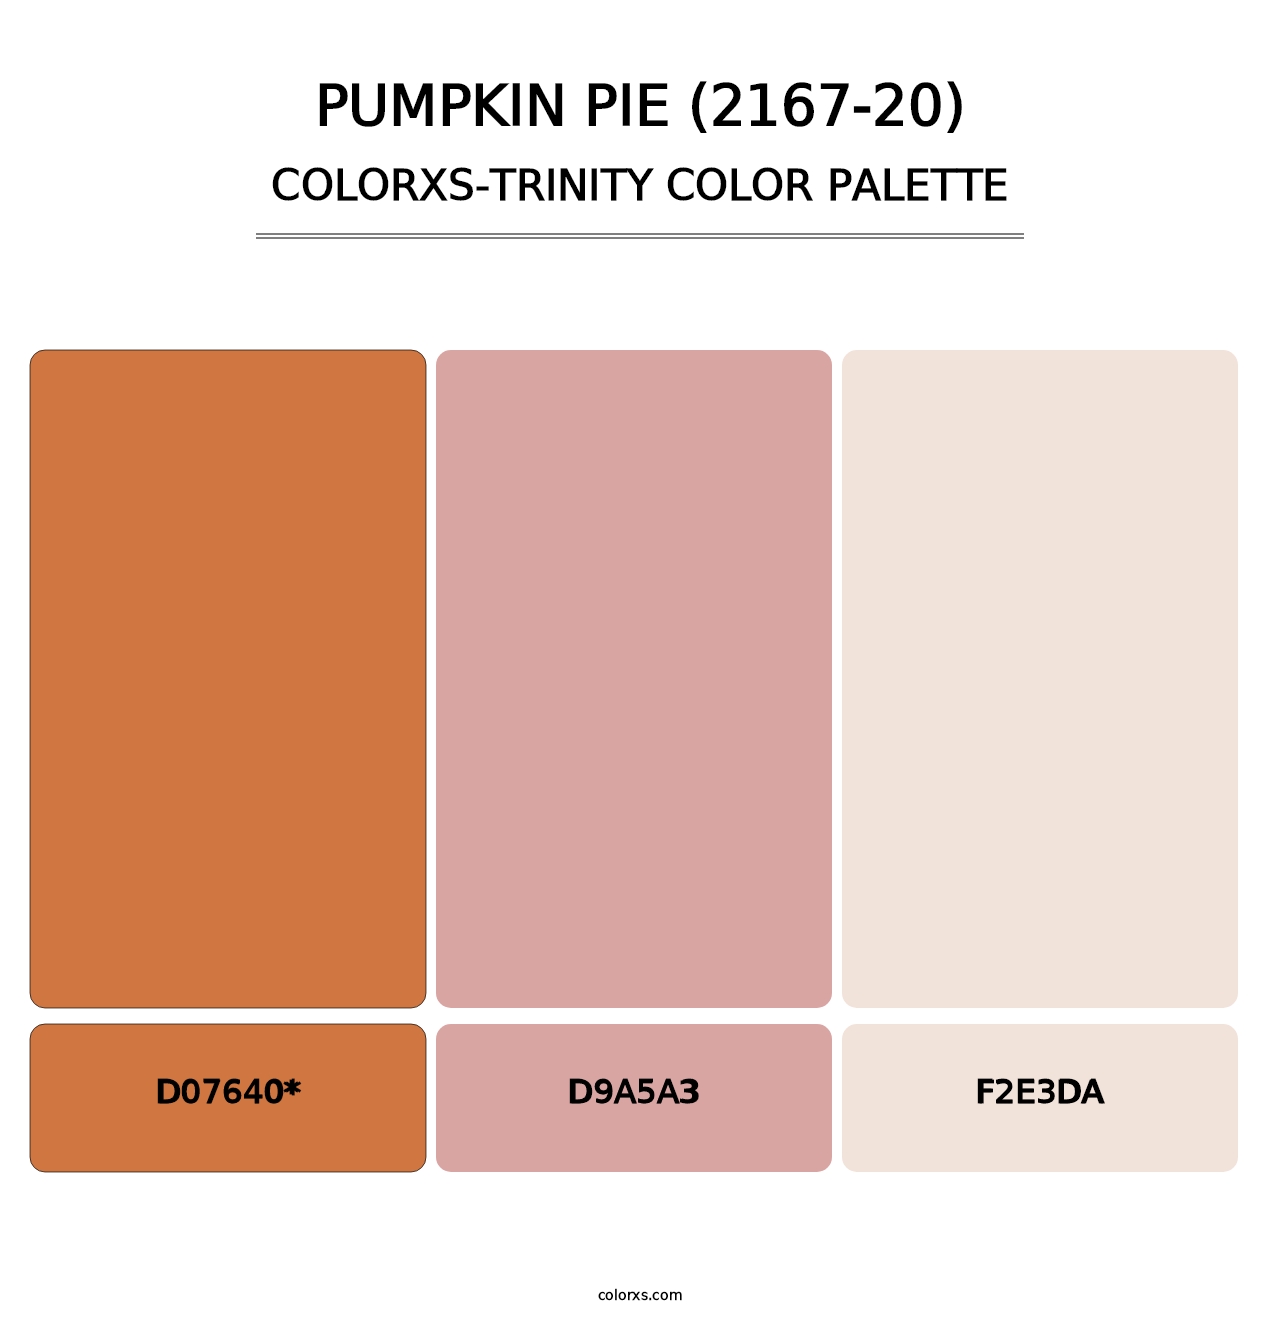 Pumpkin Pie (2167-20) - Colorxs Trinity Palette